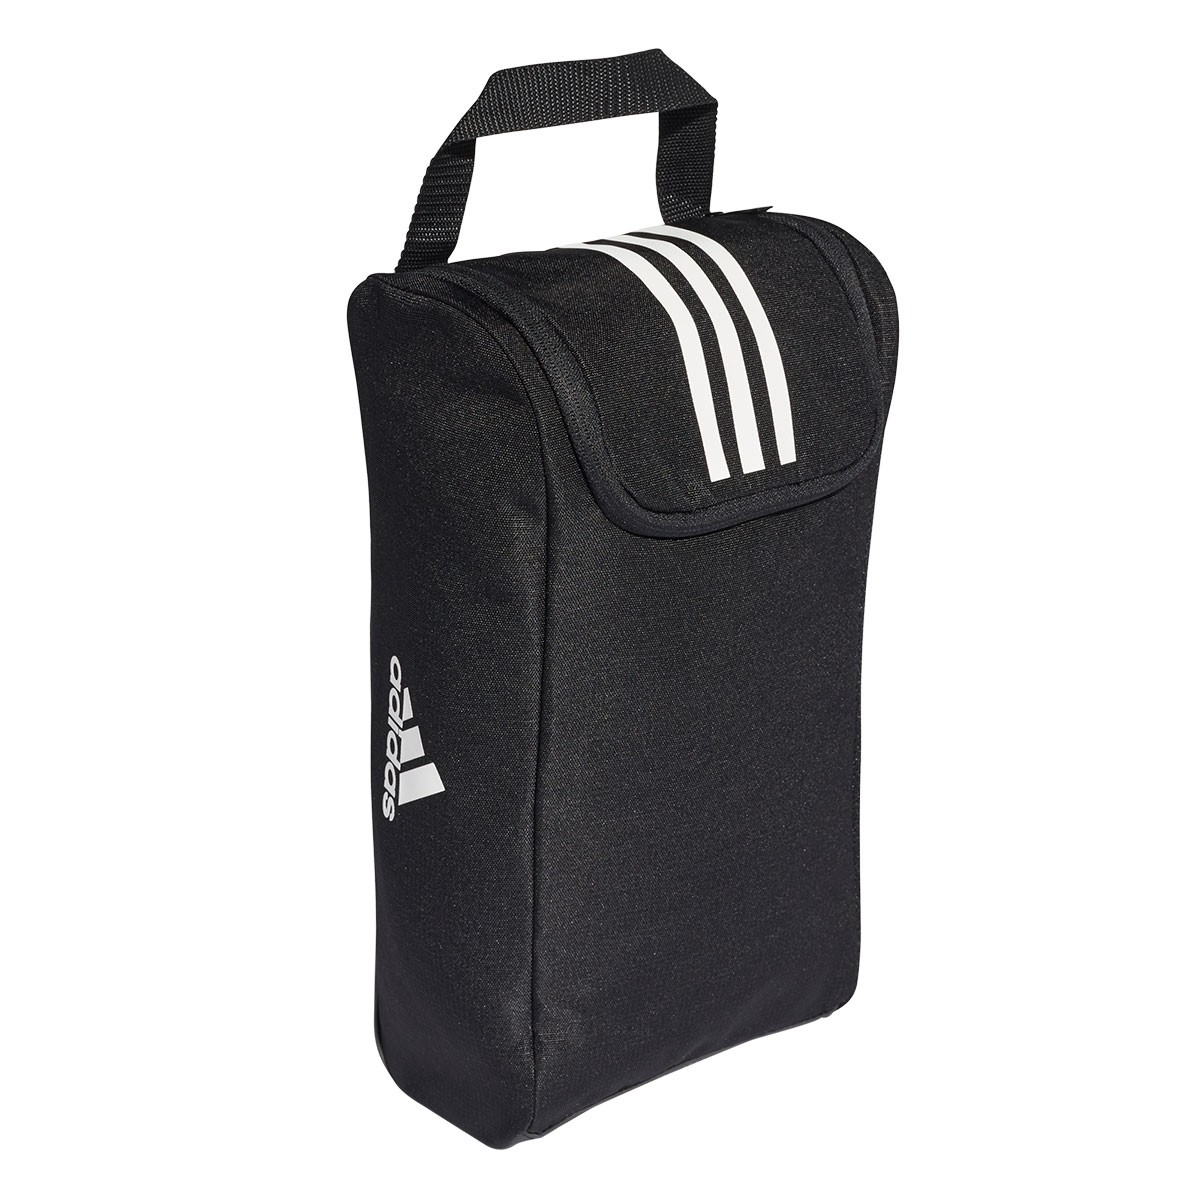 Boot bag adidas 3 Stripes Black-White 